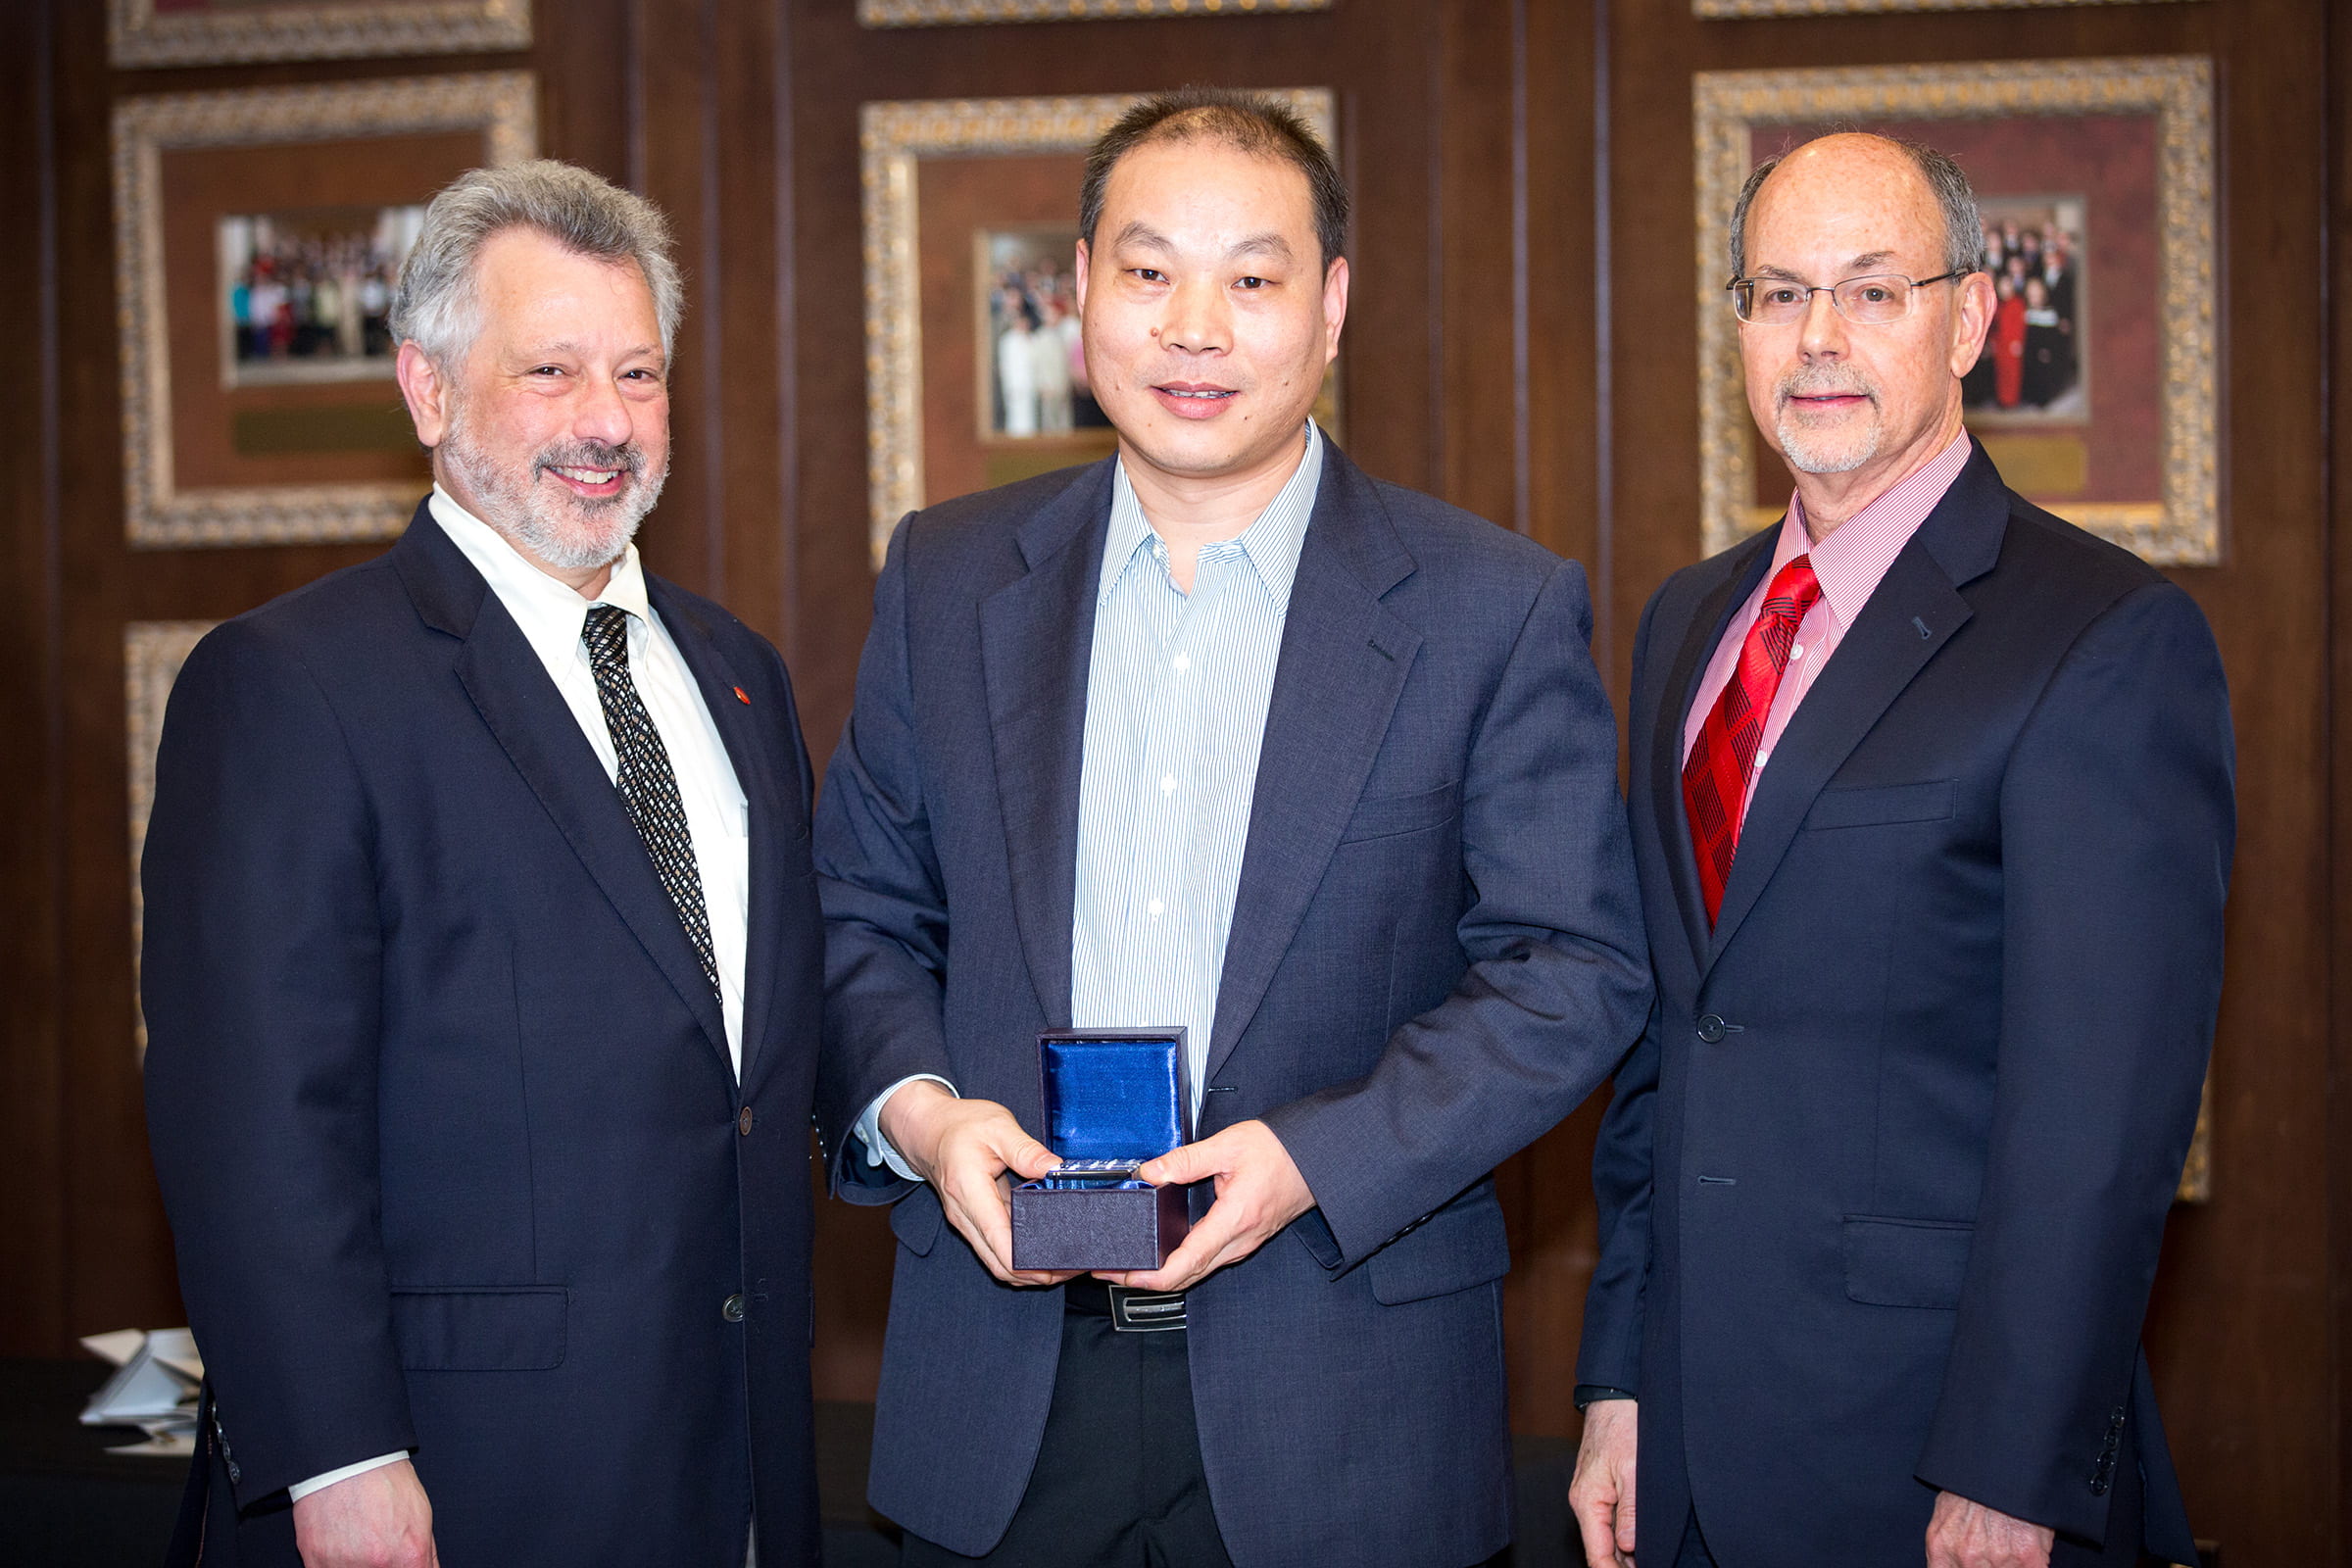 Dr. Li Gao, Dr. Kah Chun Lau, Dr. Meng, and Dr. Nicholas Kioussis